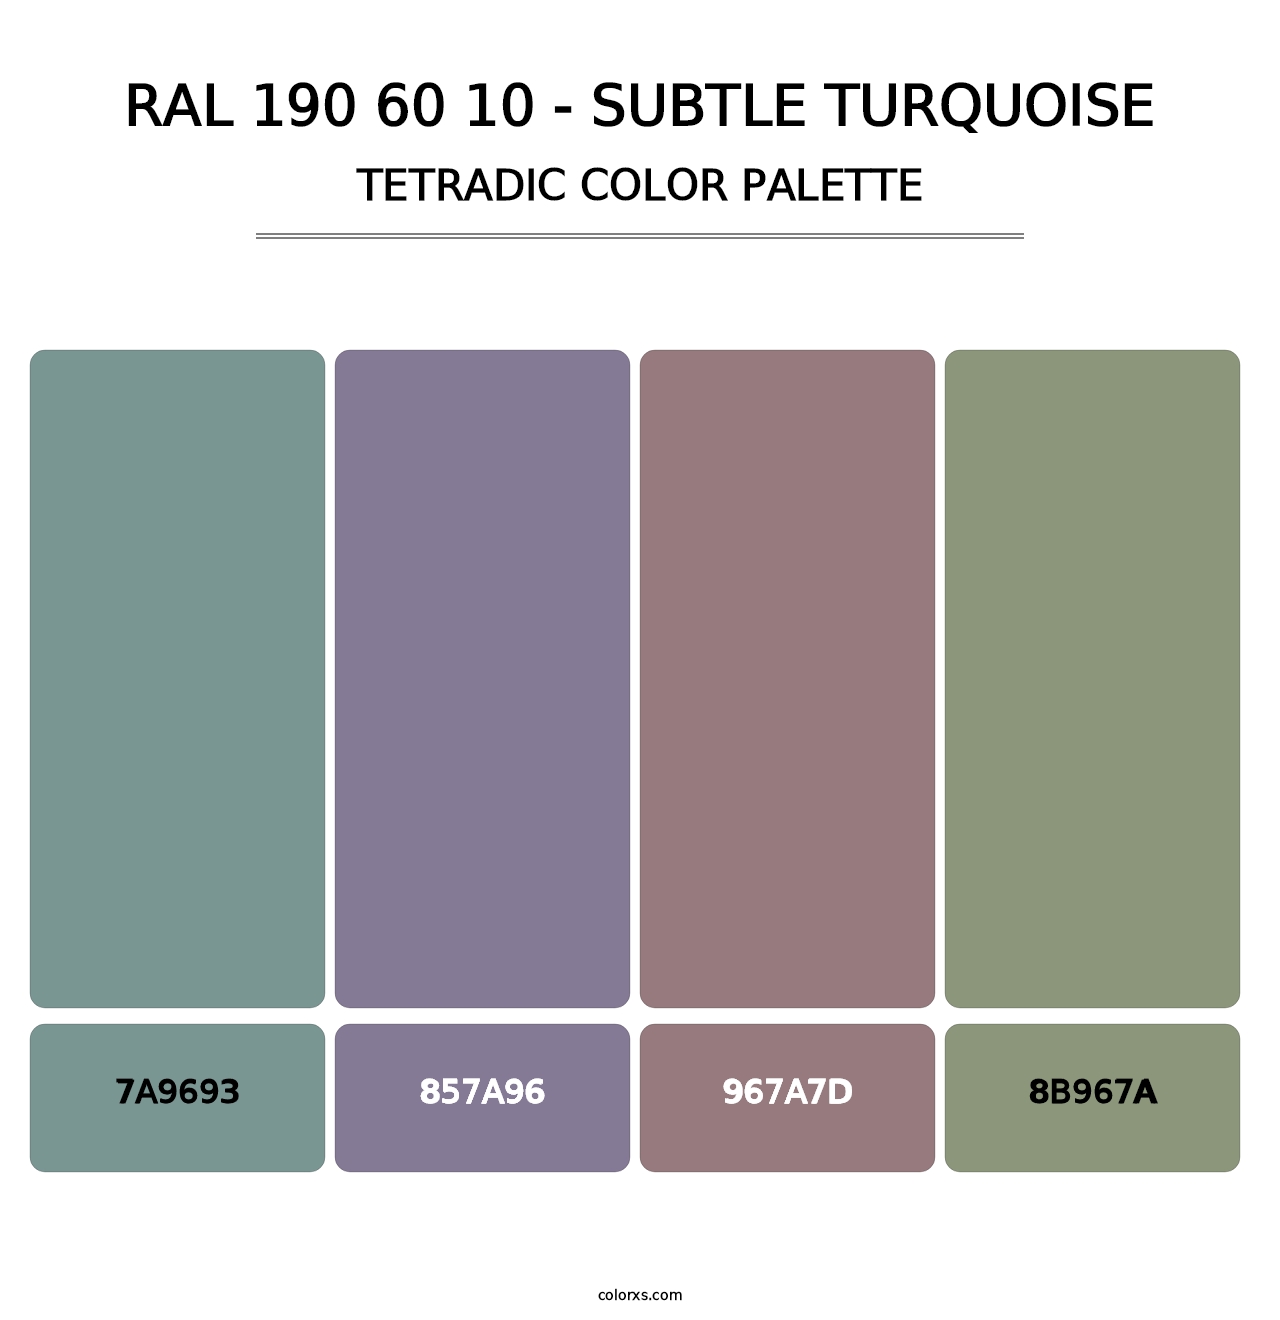 RAL 190 60 10 - Subtle Turquoise - Tetradic Color Palette